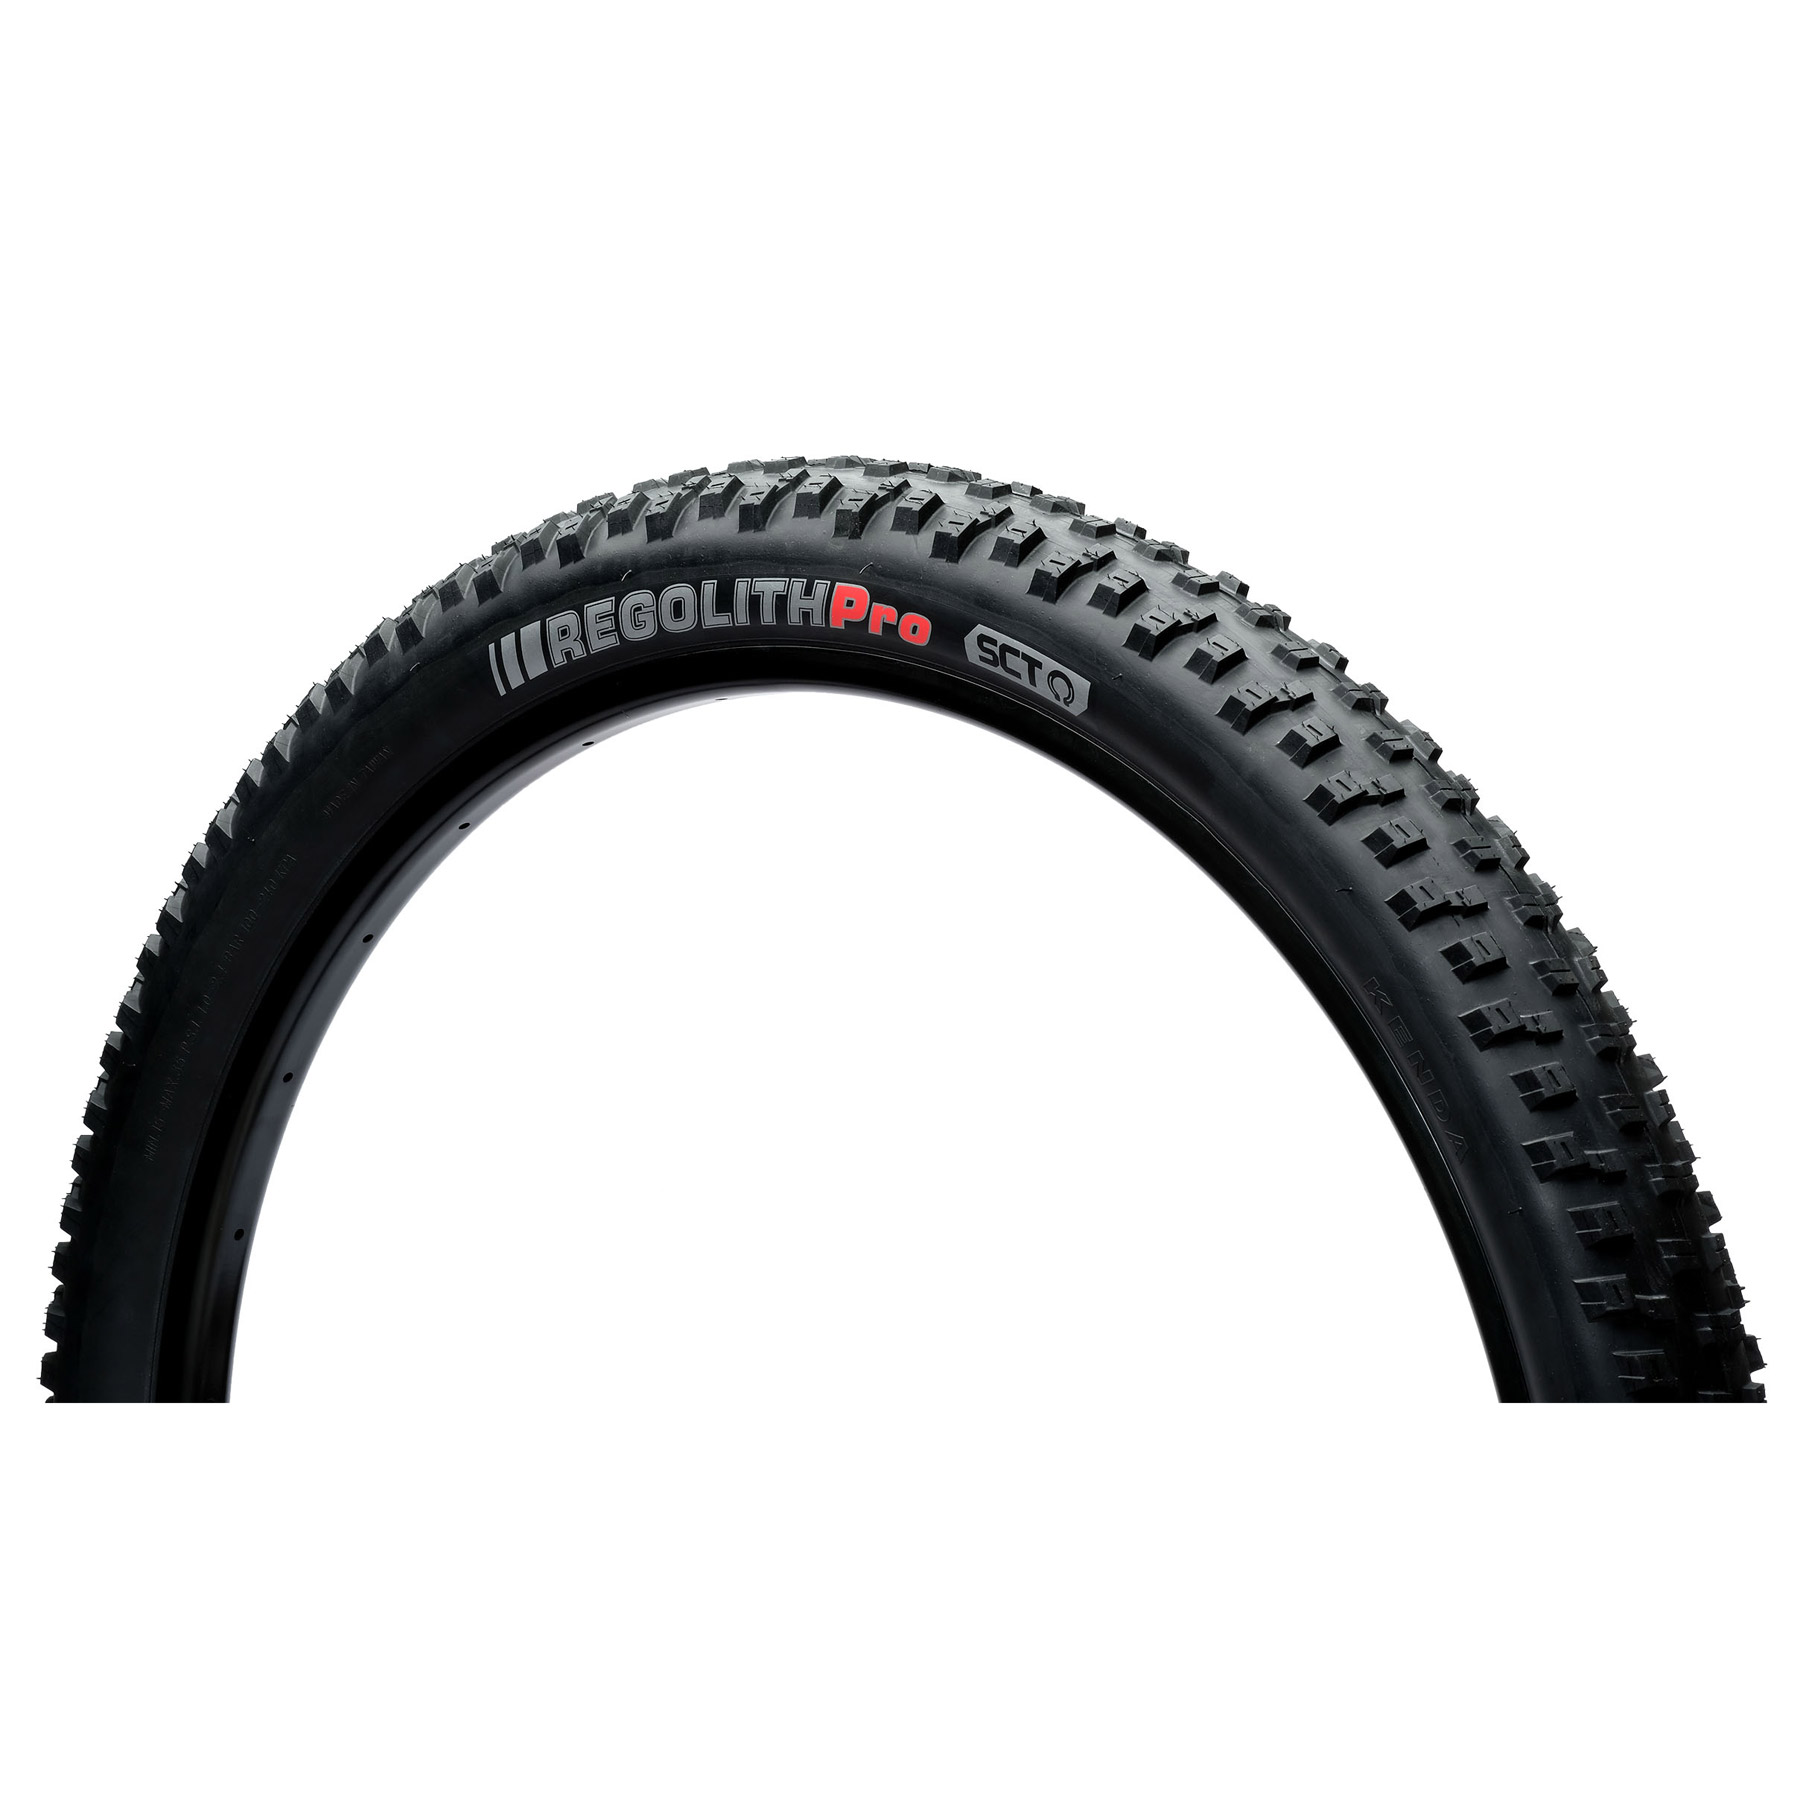 Productfoto van Kenda Regolith Pro SCT Folding Tire - 29x2.40 Inches